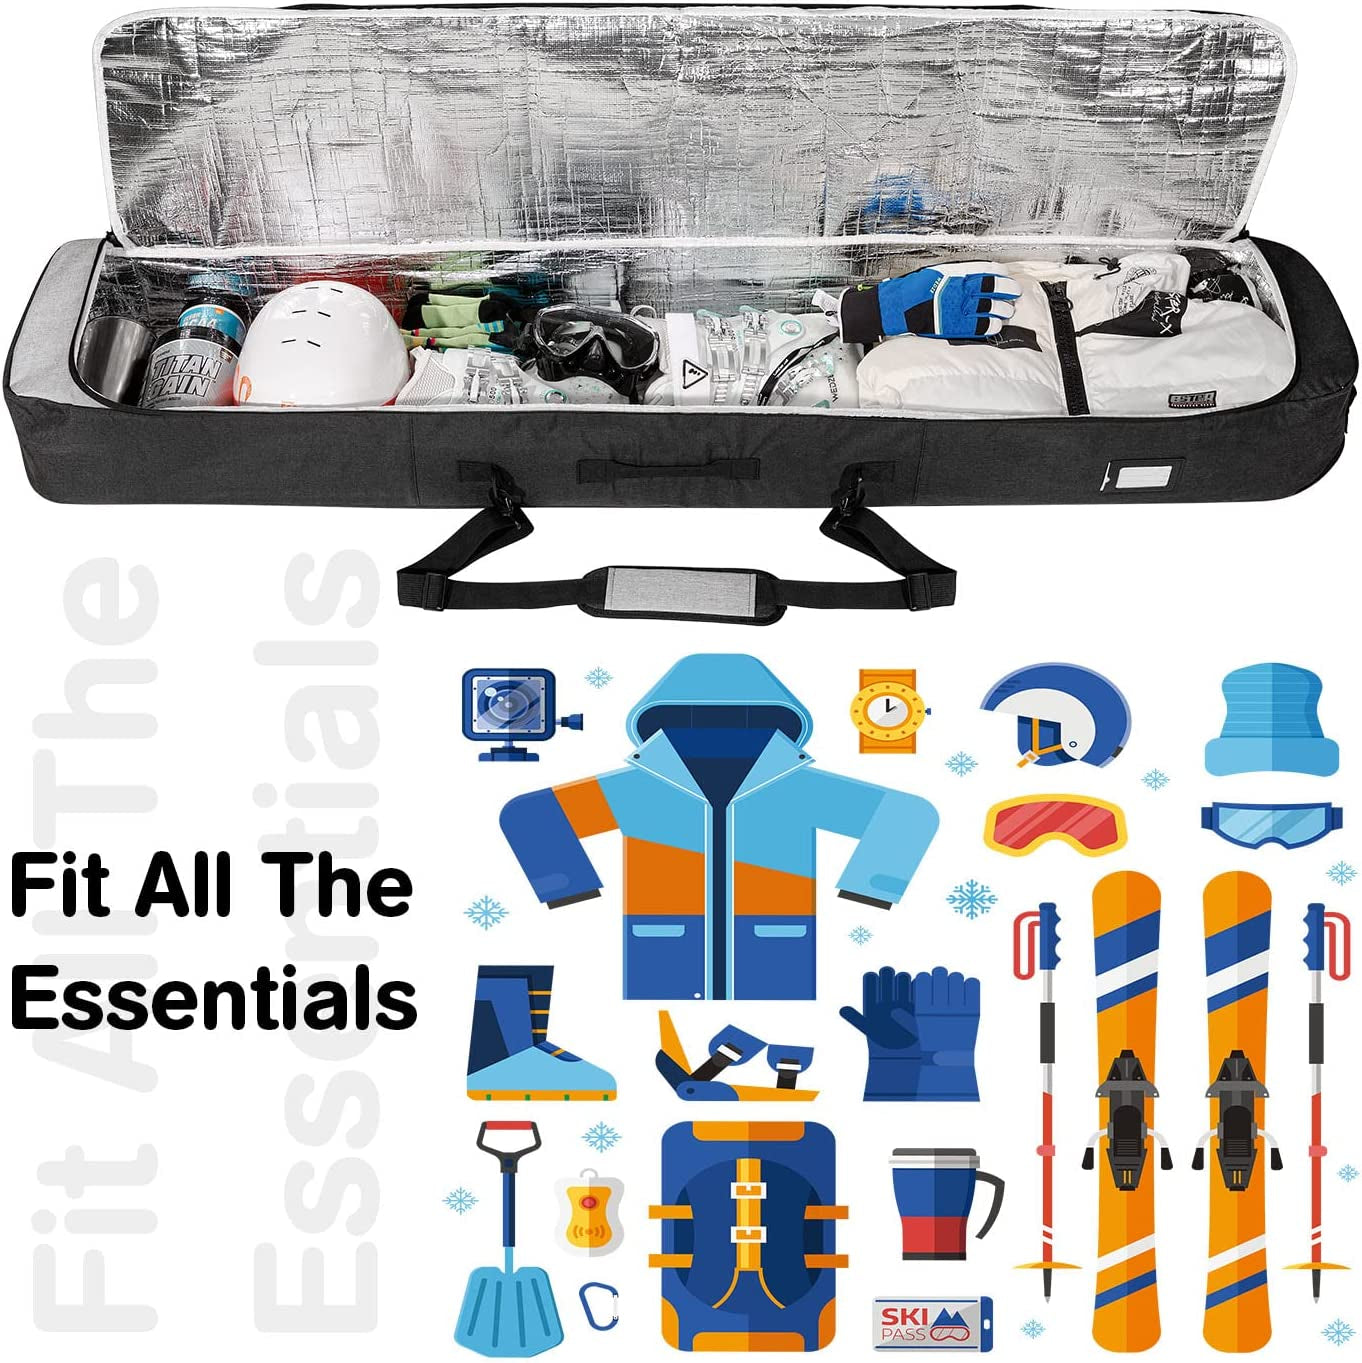 Padded Snowboard Bag Ski Bag 600D Water-Resistant Polyester Fits Board ,Bindings, Boots, Jacket, Pants, Helmet Unisex Bag for Air Travel